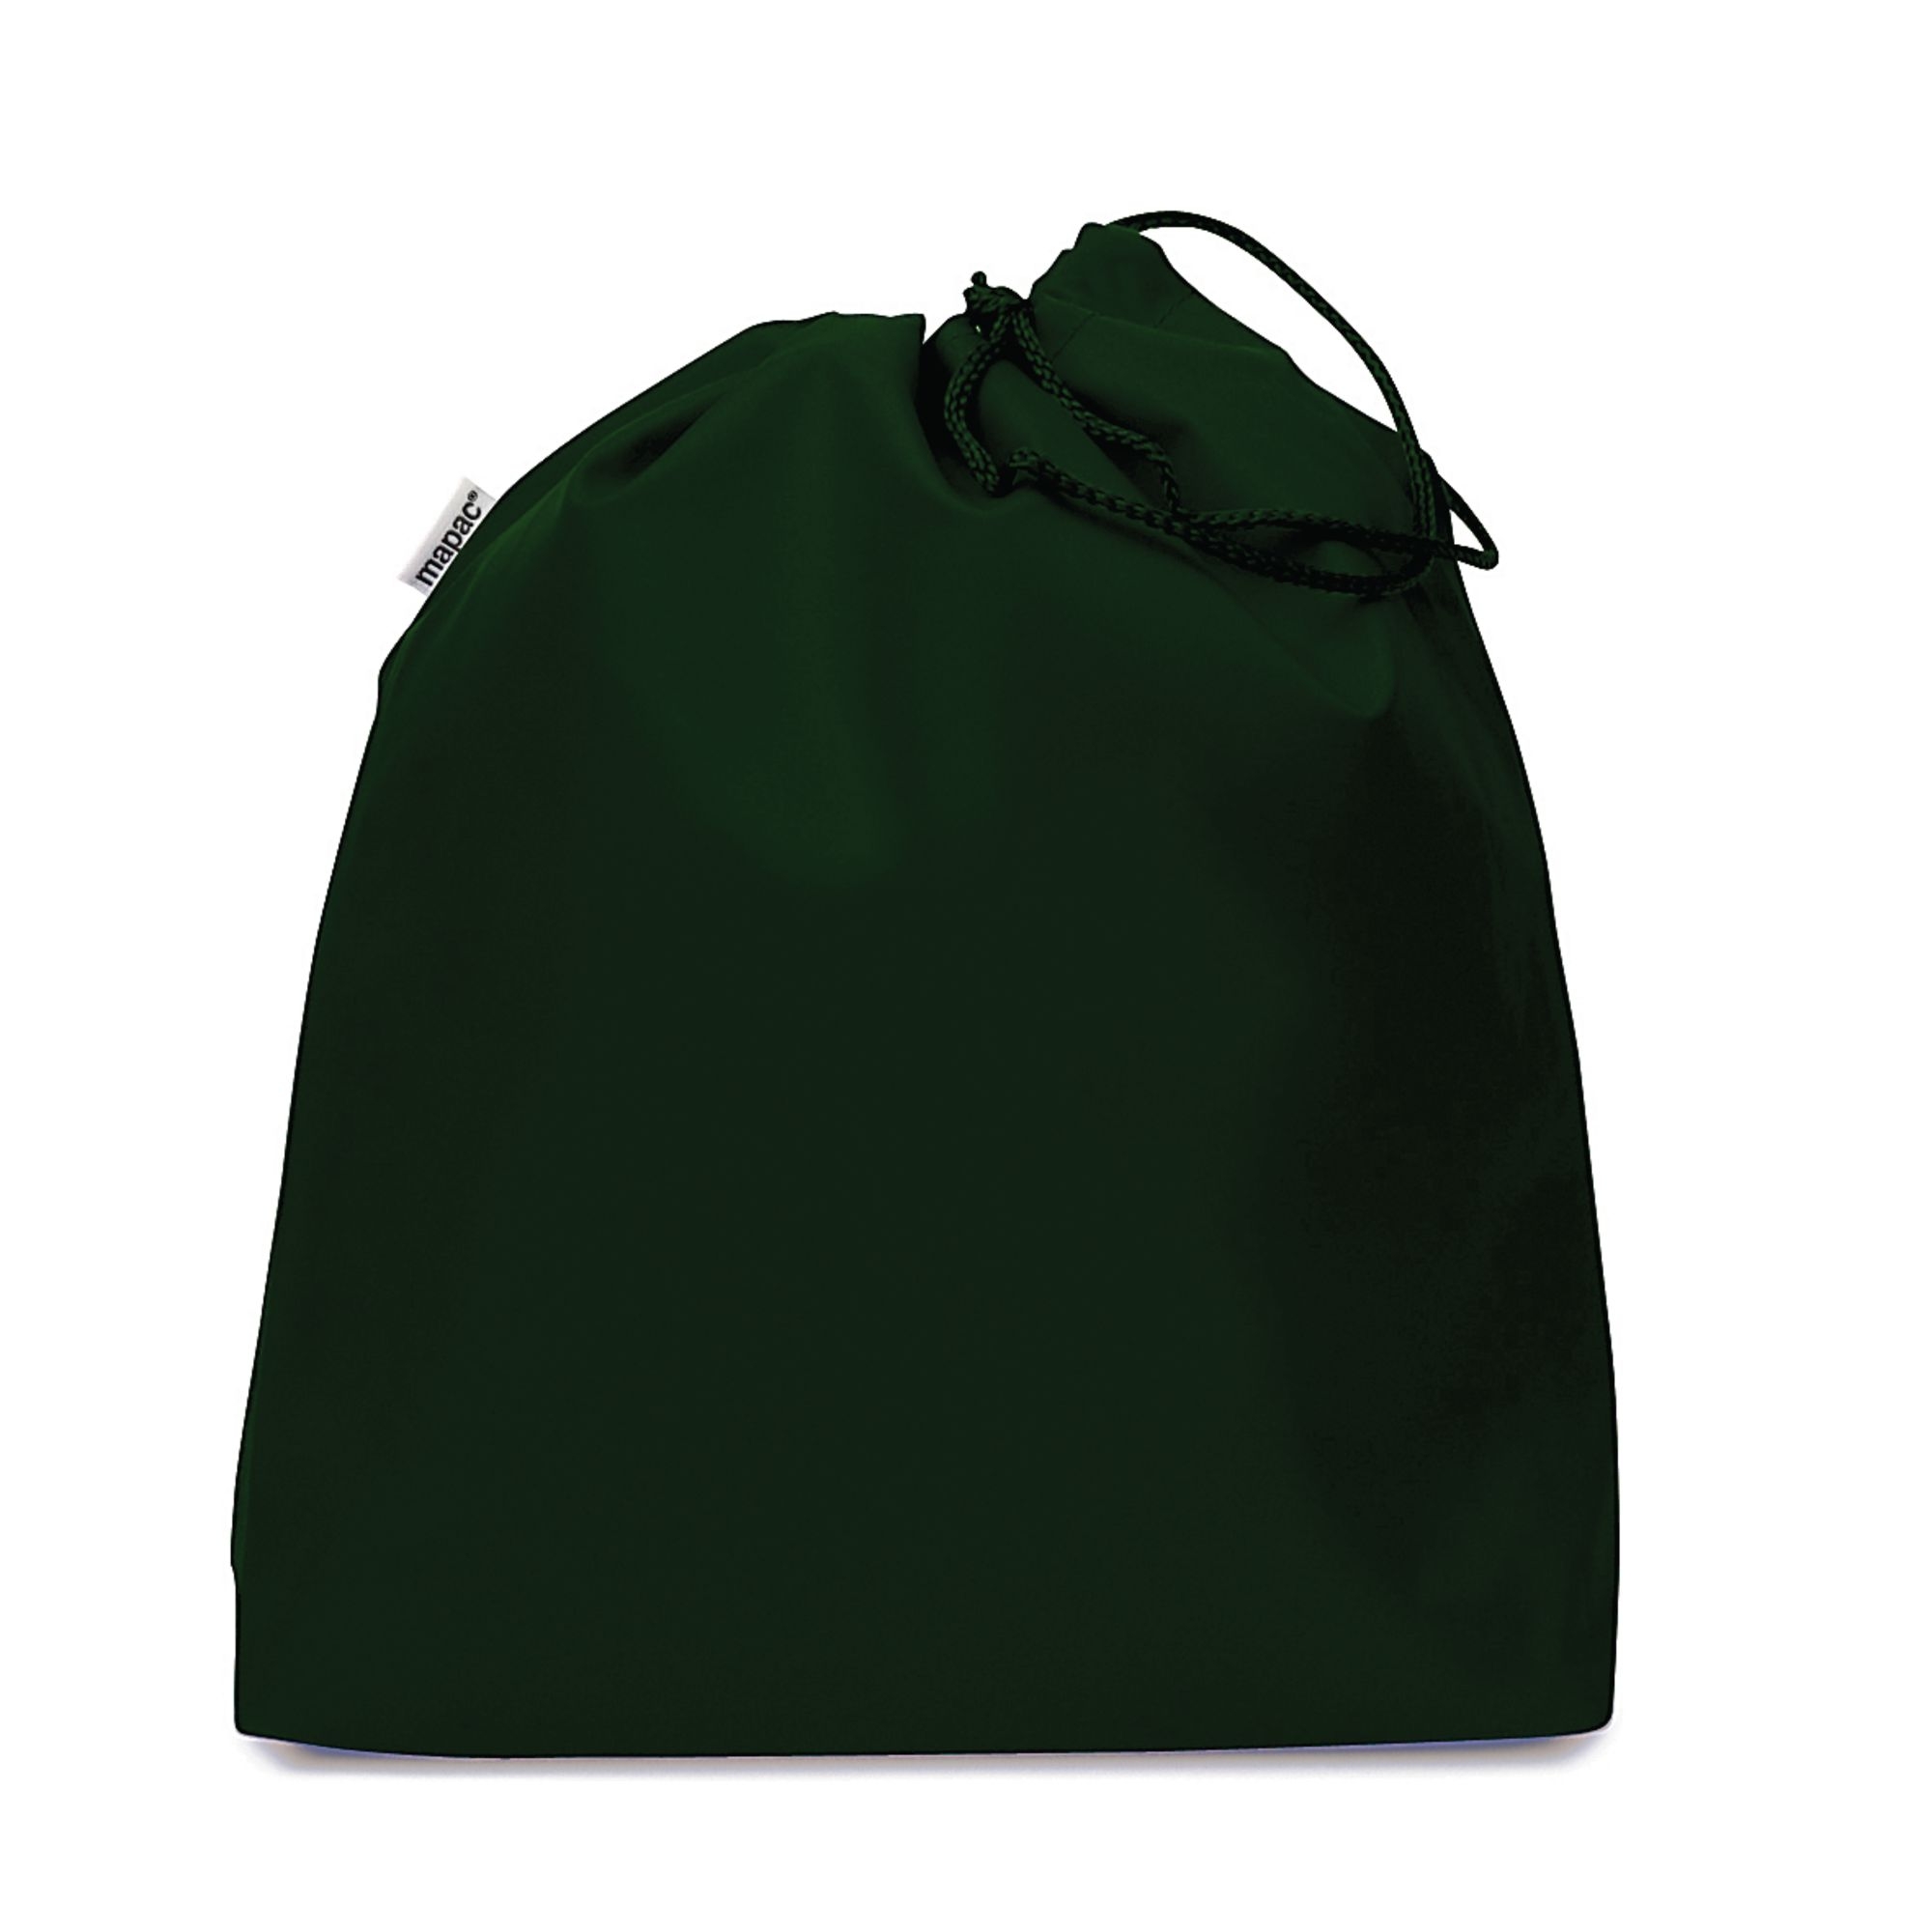 Plain Gym Bag Green - Pack of 25